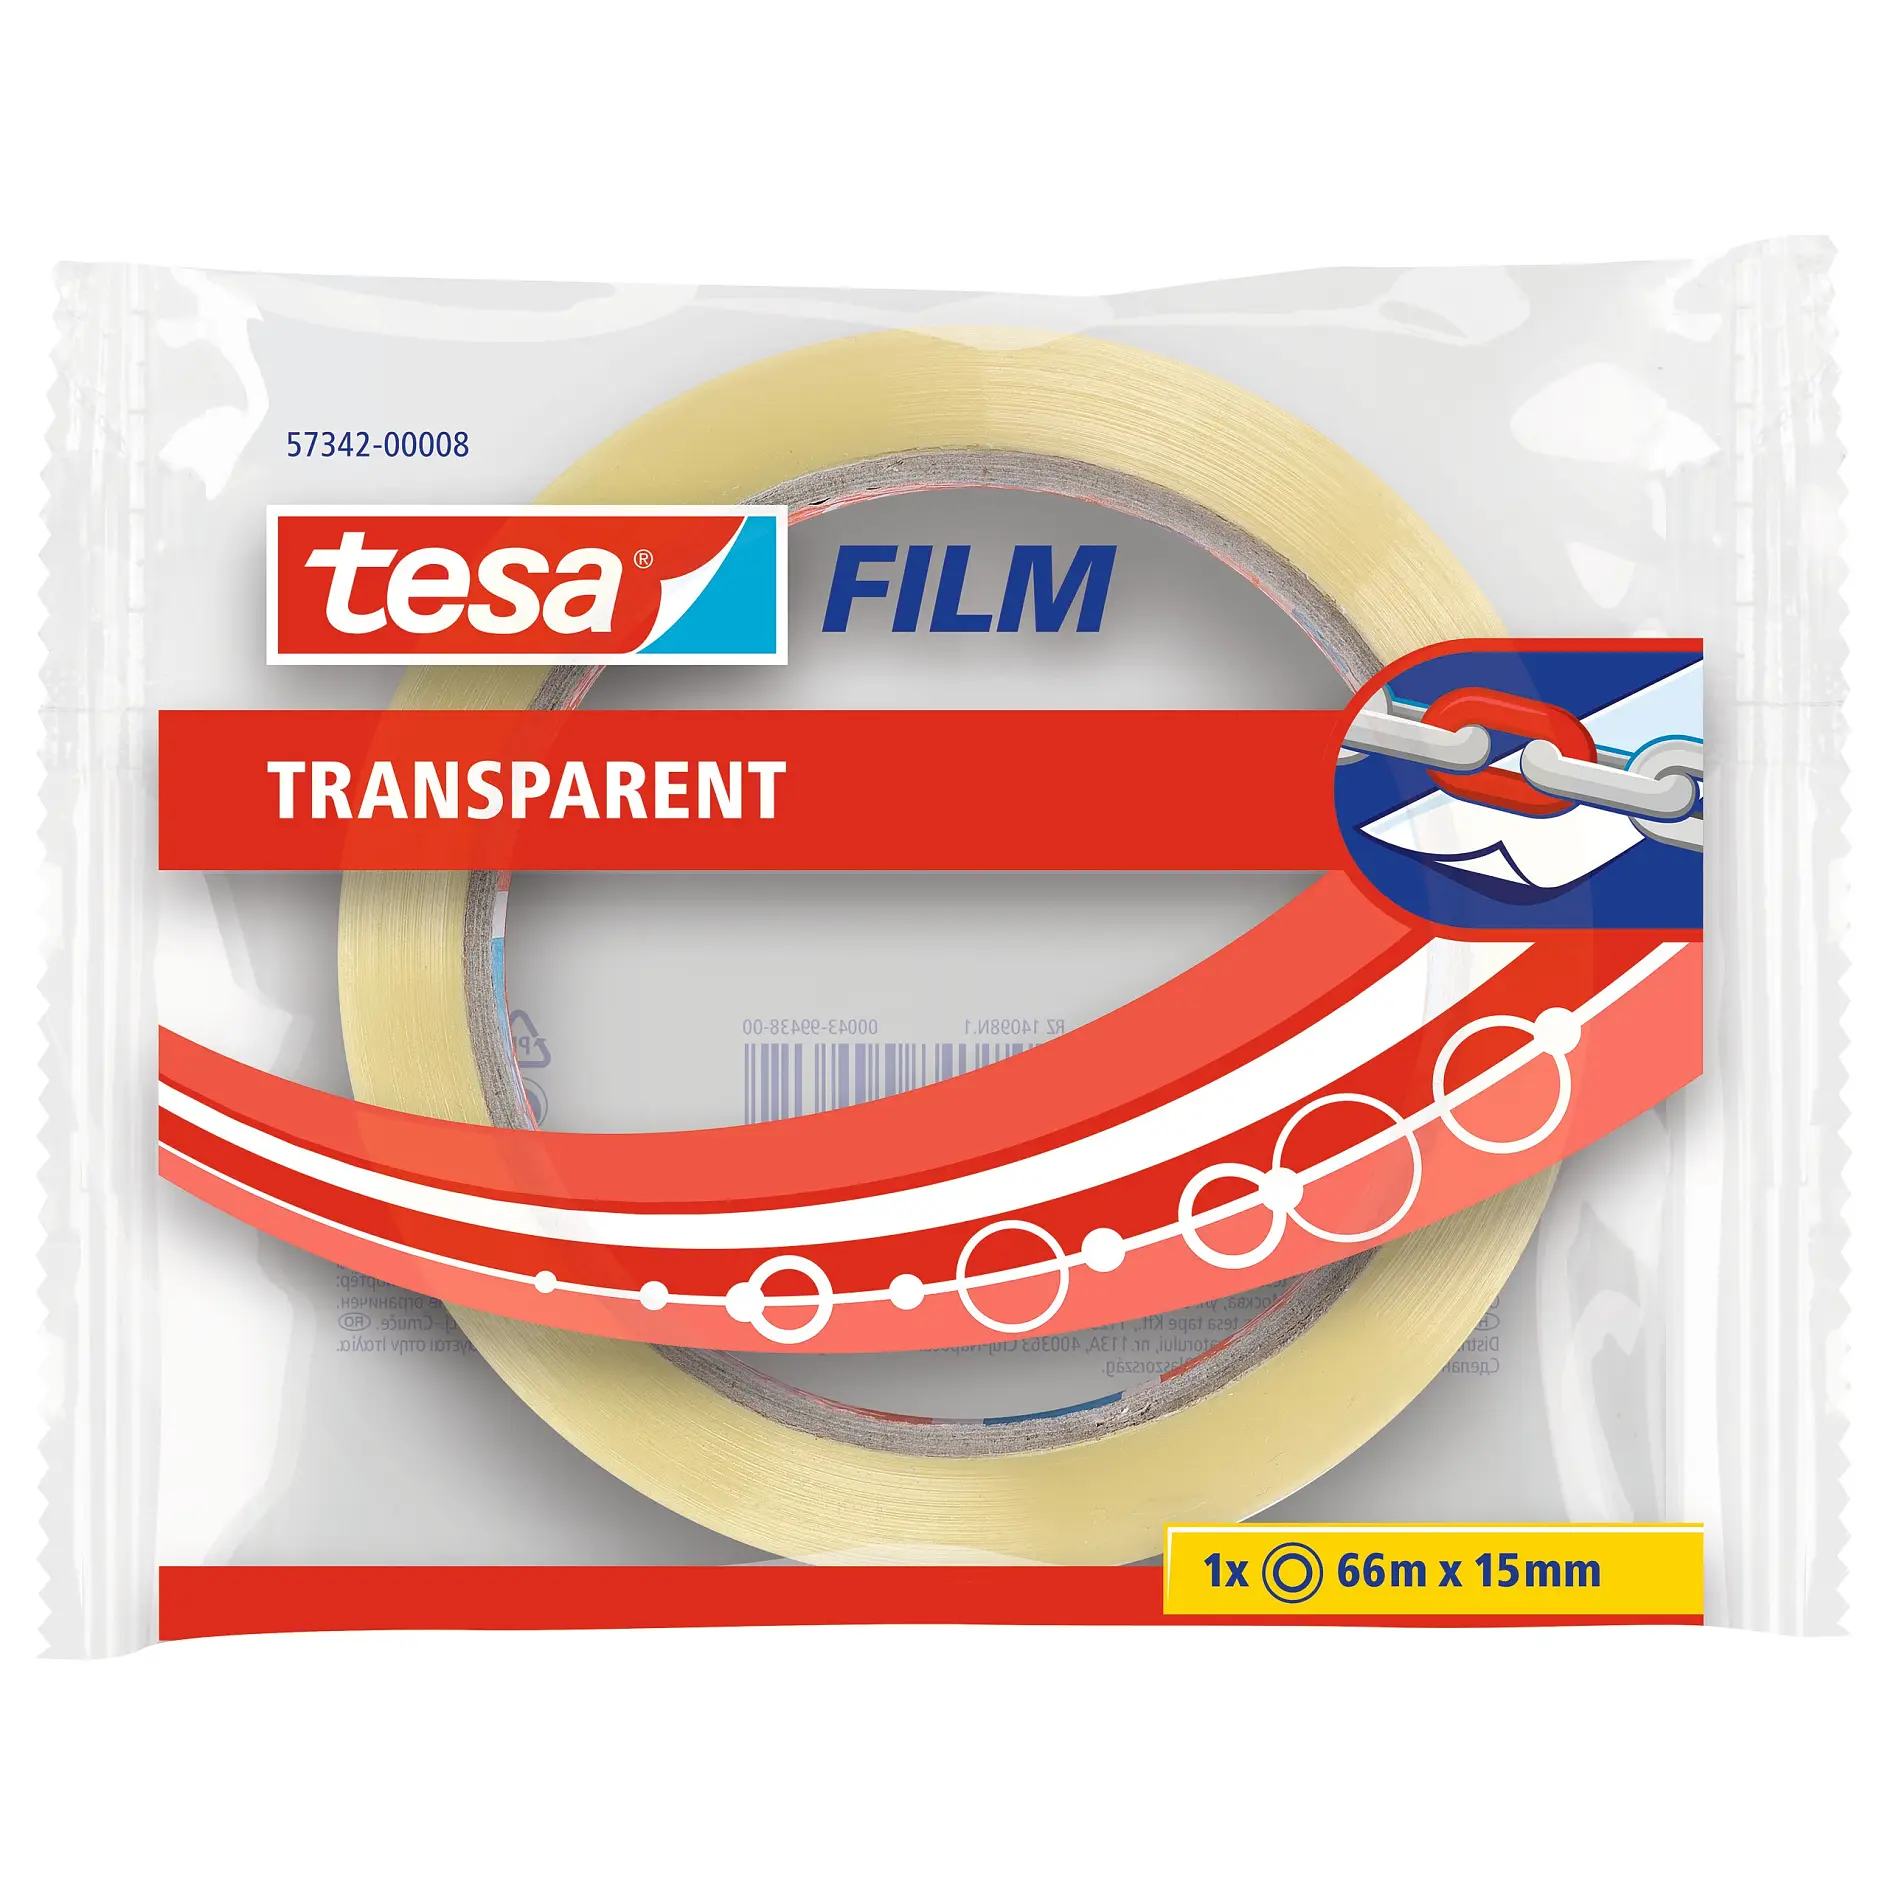 [en-en] 1 x tesafilm Transparent 66m x 15mm, Flowpack